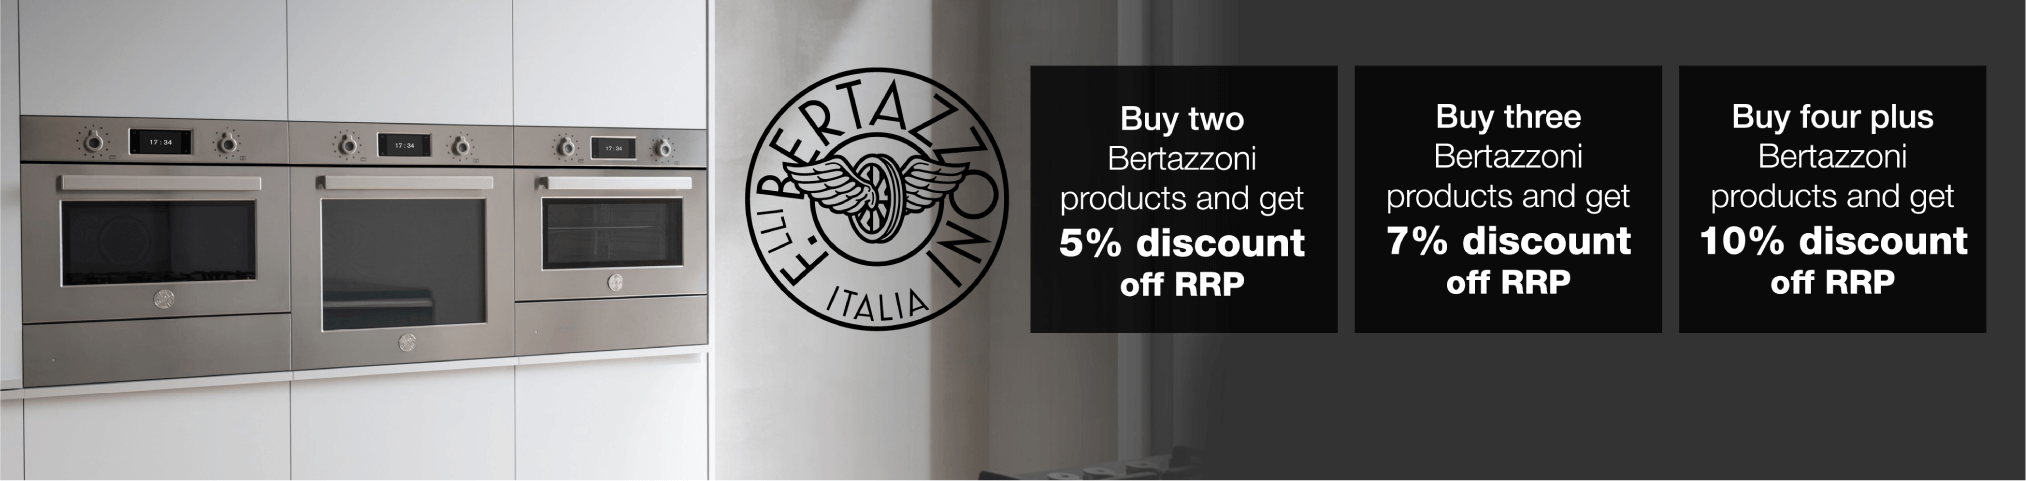 Save up to 10% on Bertazzoni